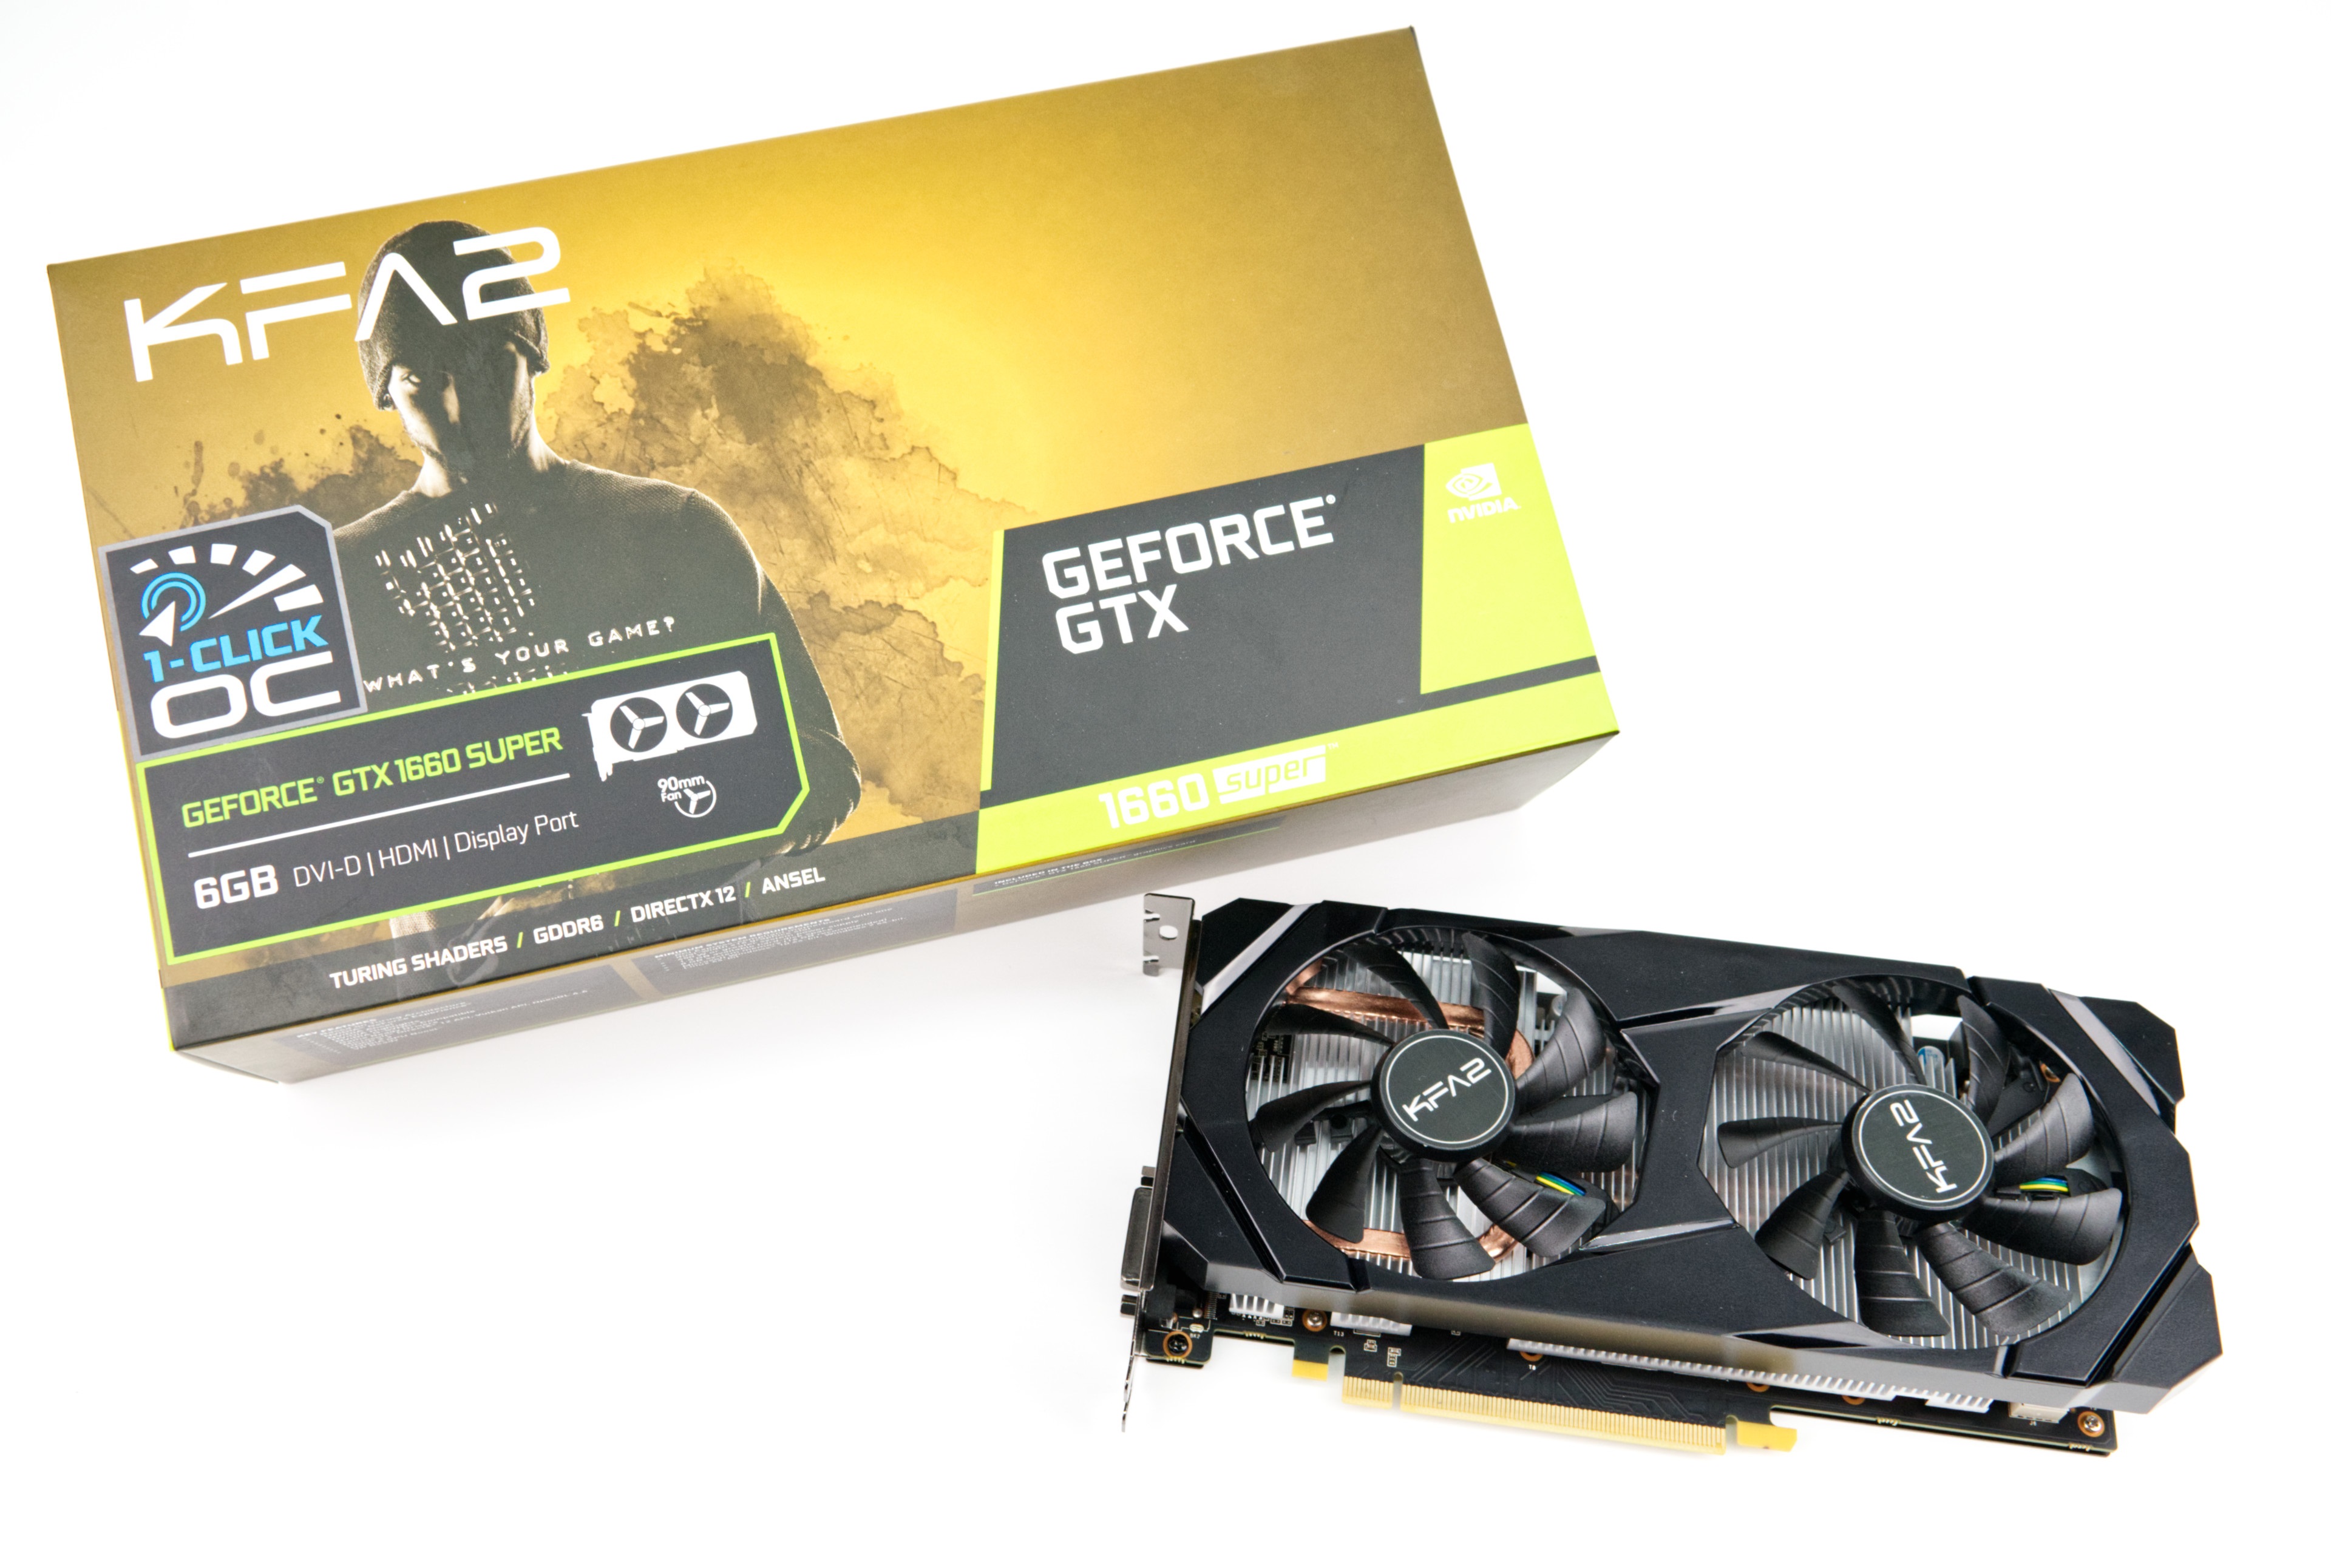 KFA2 GeForce GTX 1660 SUPER Desktop GPU Review: The GTX 16 series